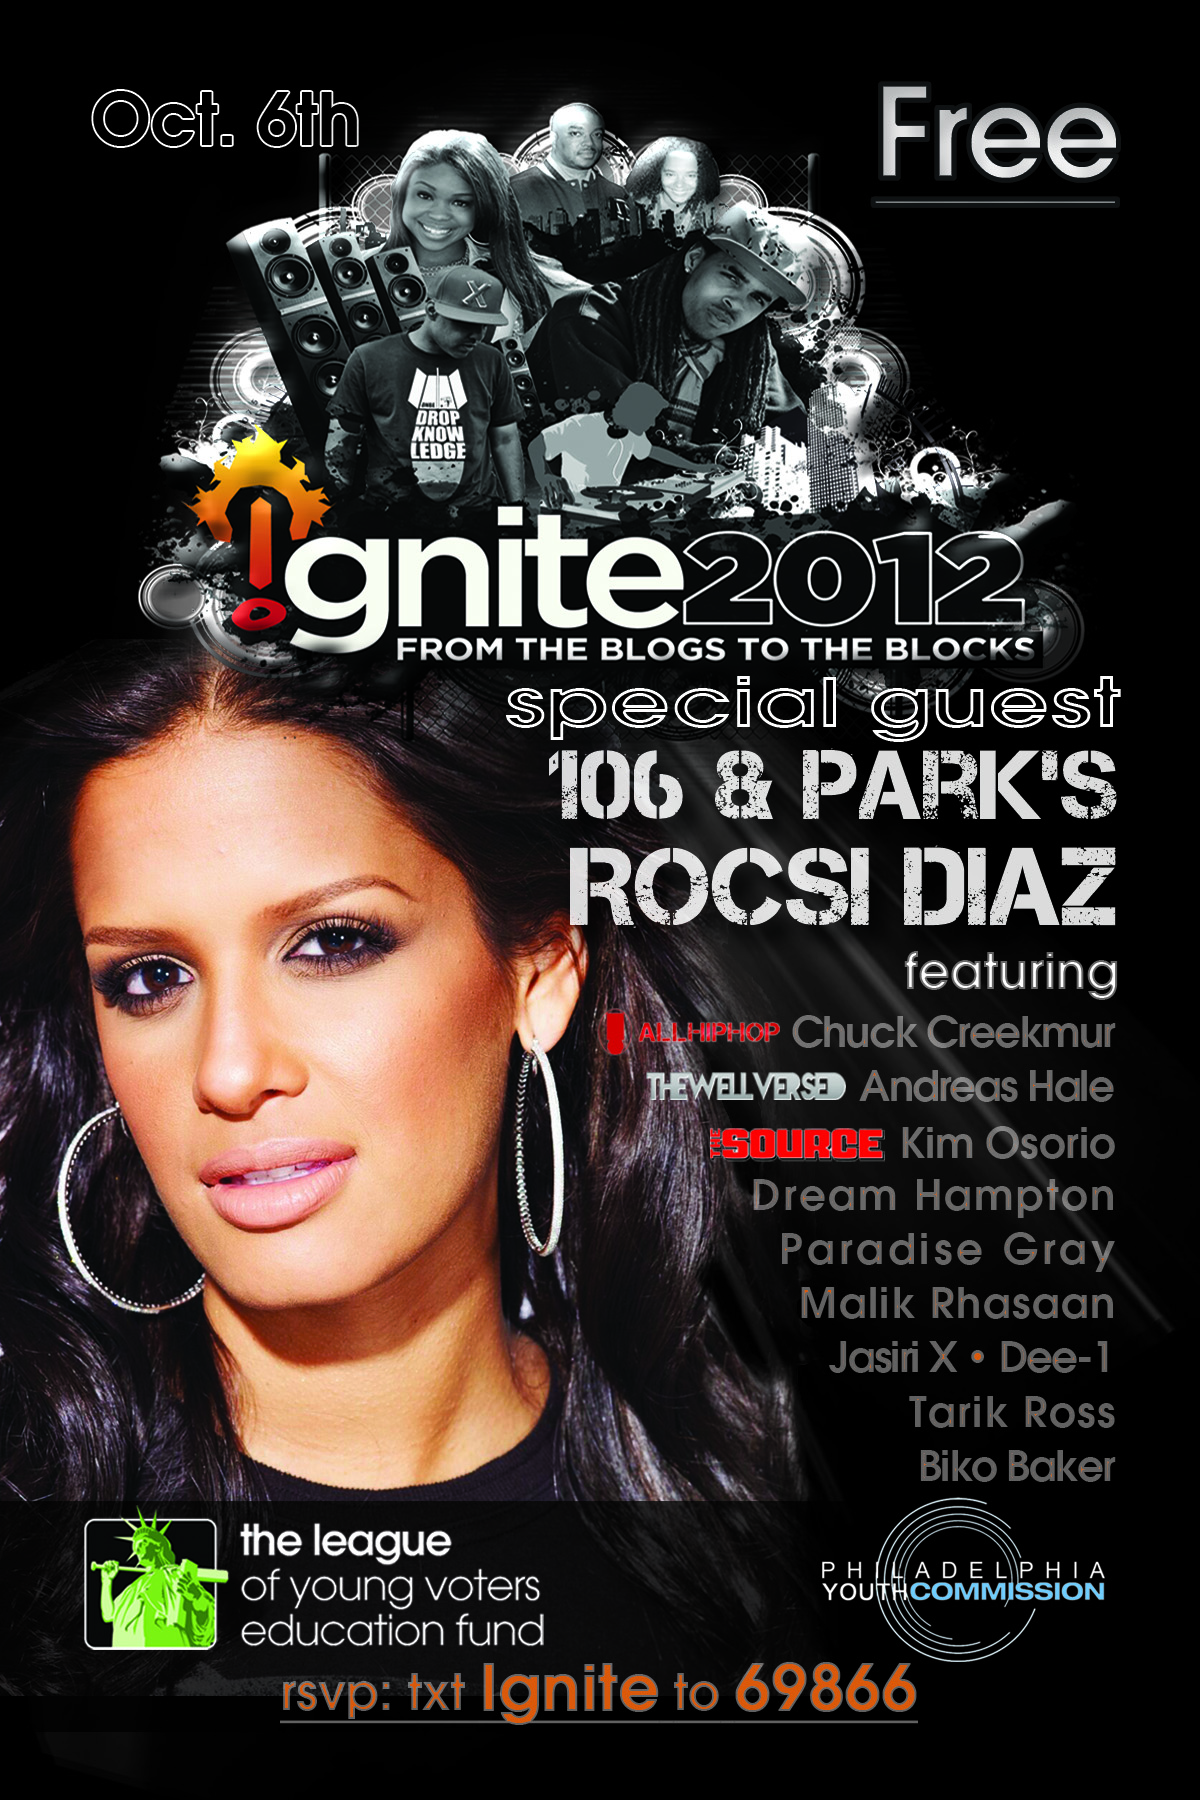 IgnitePhilly. #Ignite2012 (Philadelphia) w/ @theLeague99 @Rocsidiaz @Bwyche @Dreamhampton & More (10-6-12) 